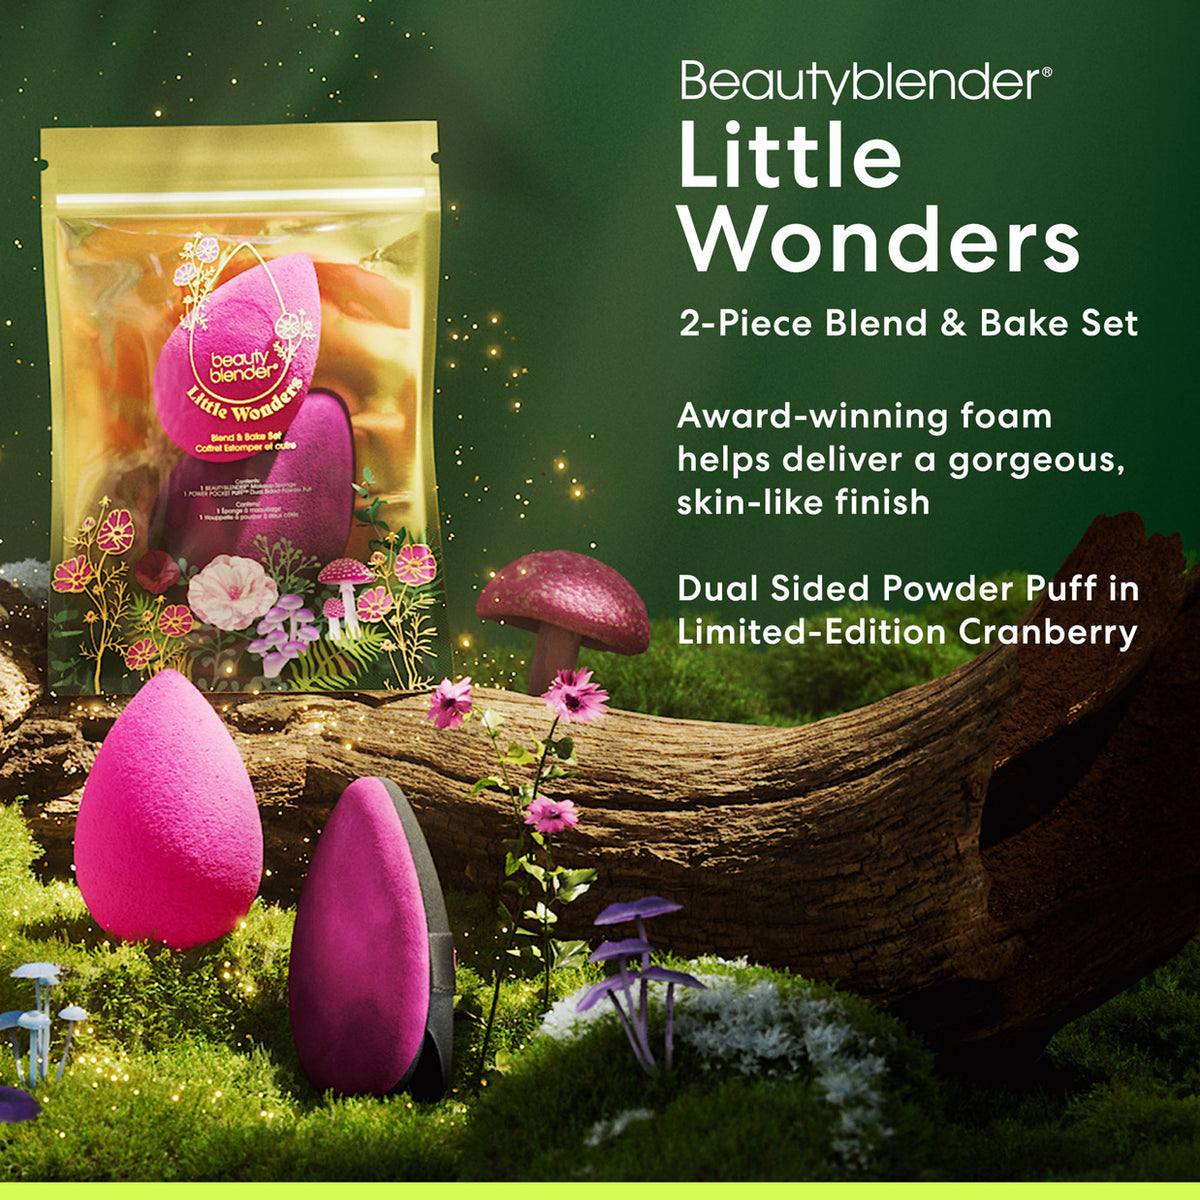 Little Wonders 2-Piece Blend & Bake Set.